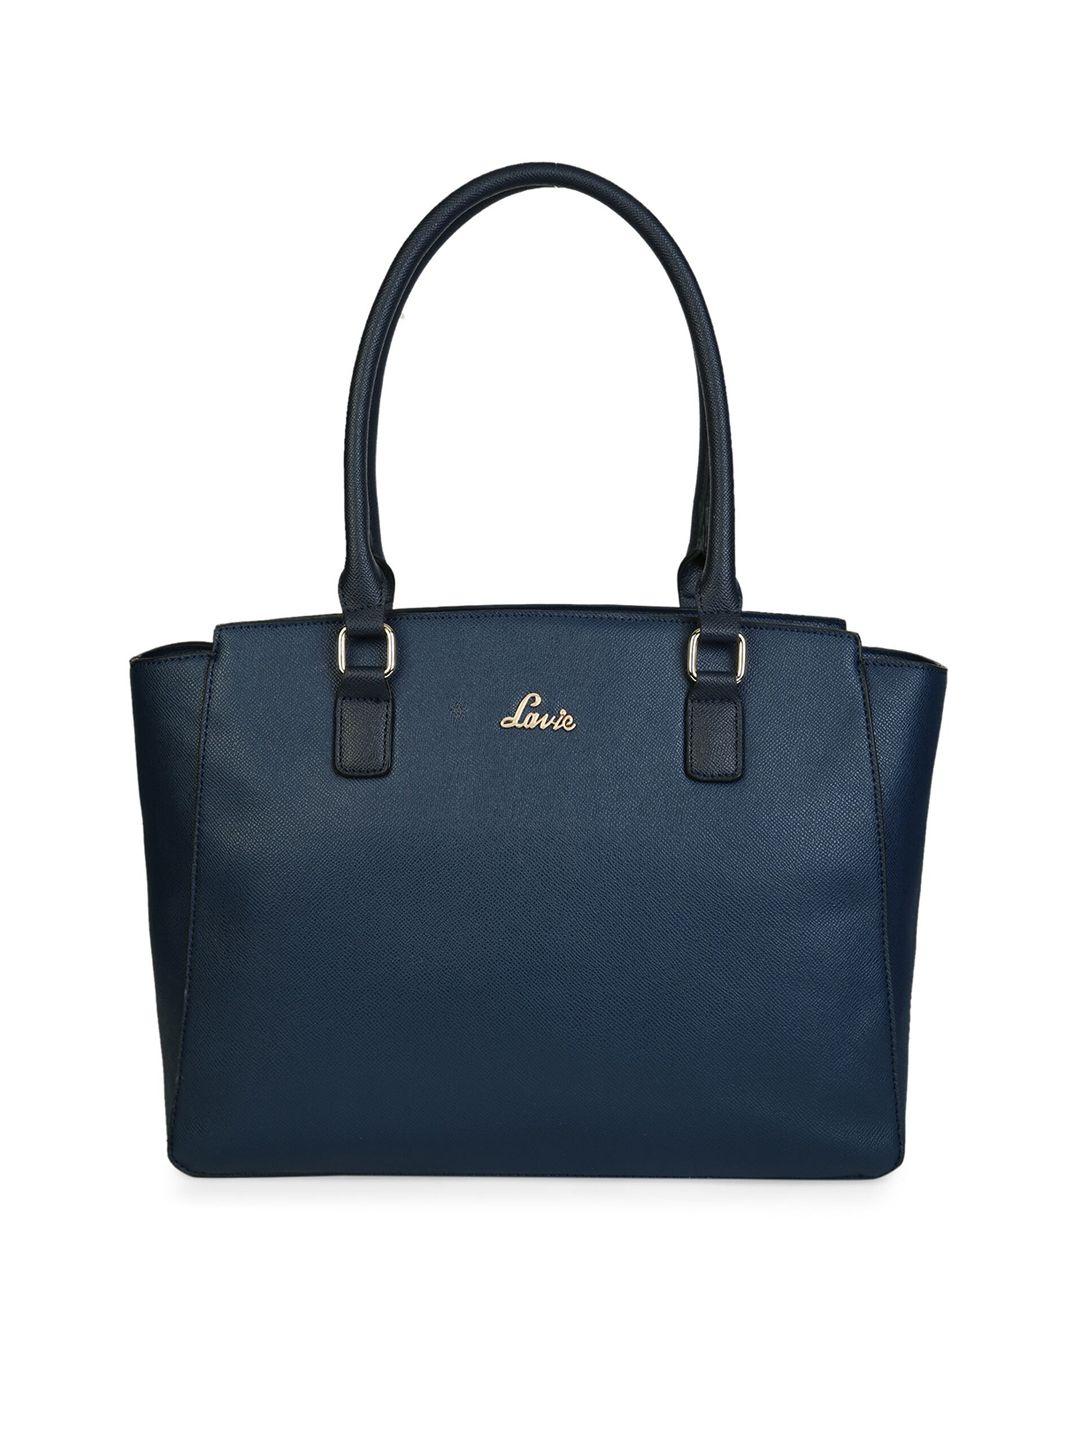 lavie navy blue structured handheld bag